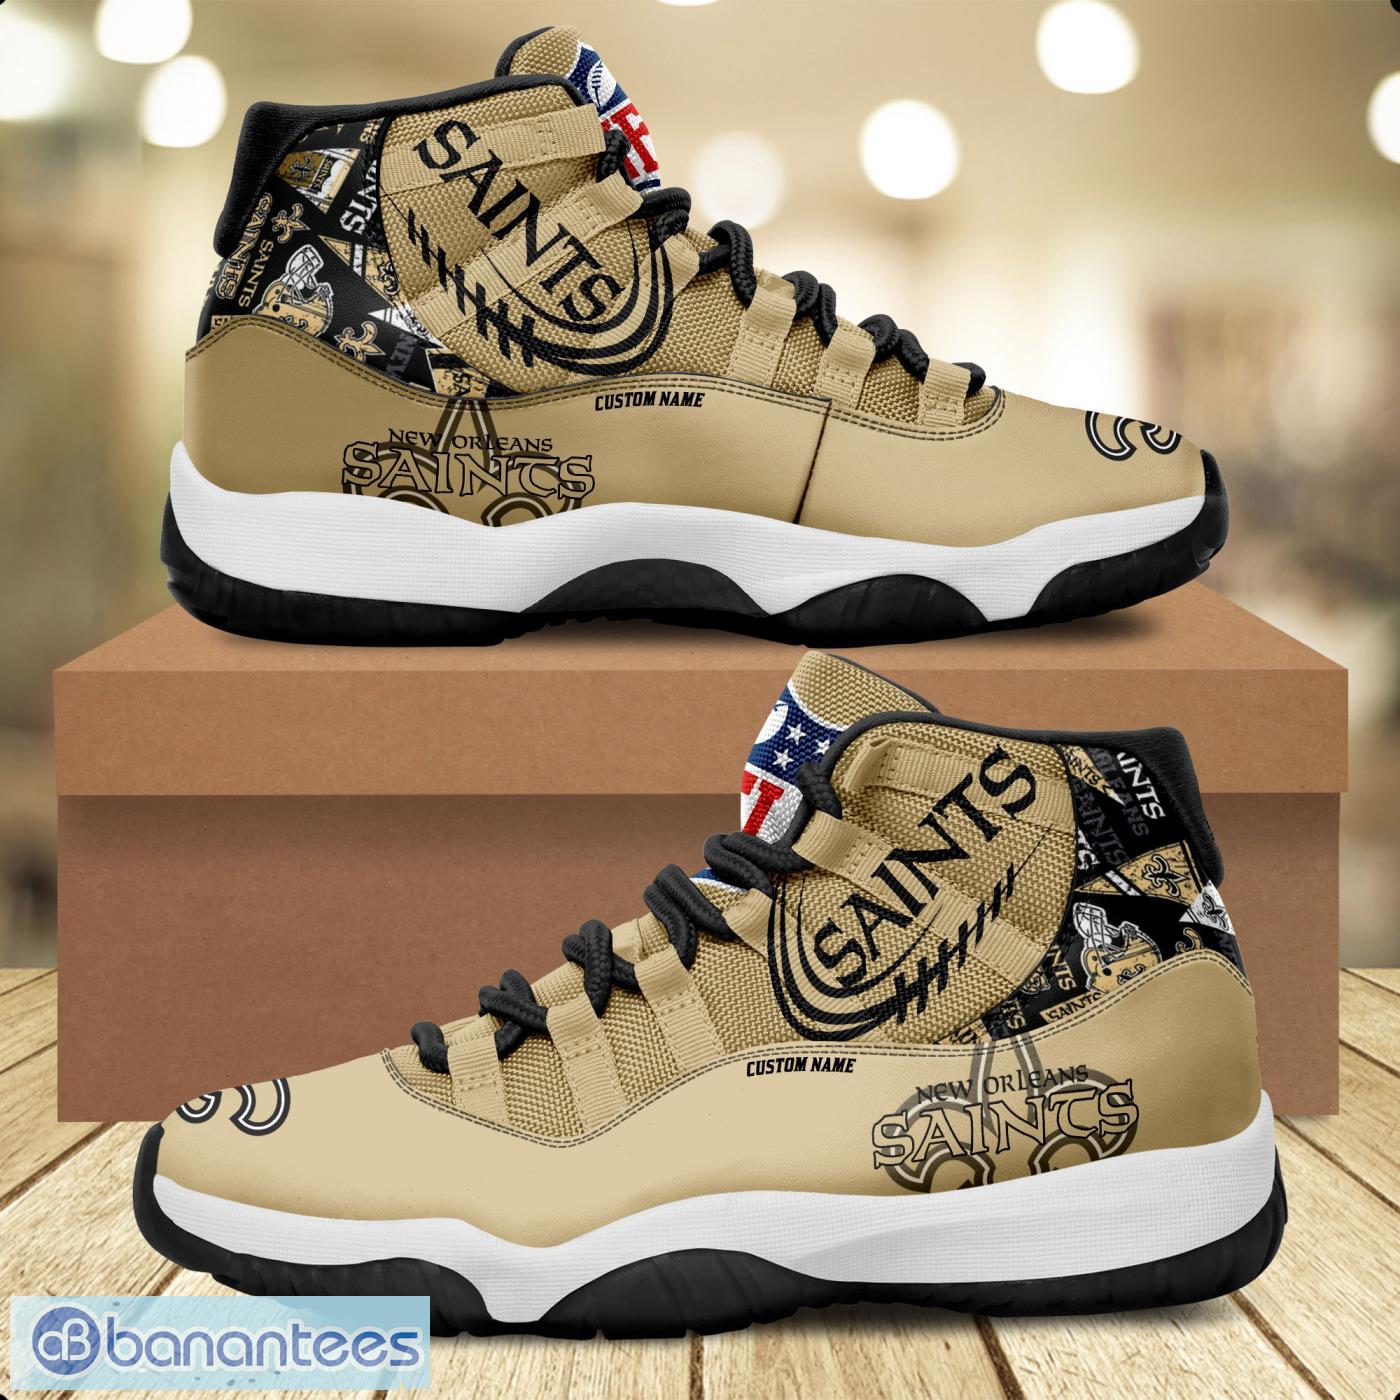 Los Angeles Chargers Custom Name Air Jordan 11 Sneaker Shoes For Sport Fans  - Banantees